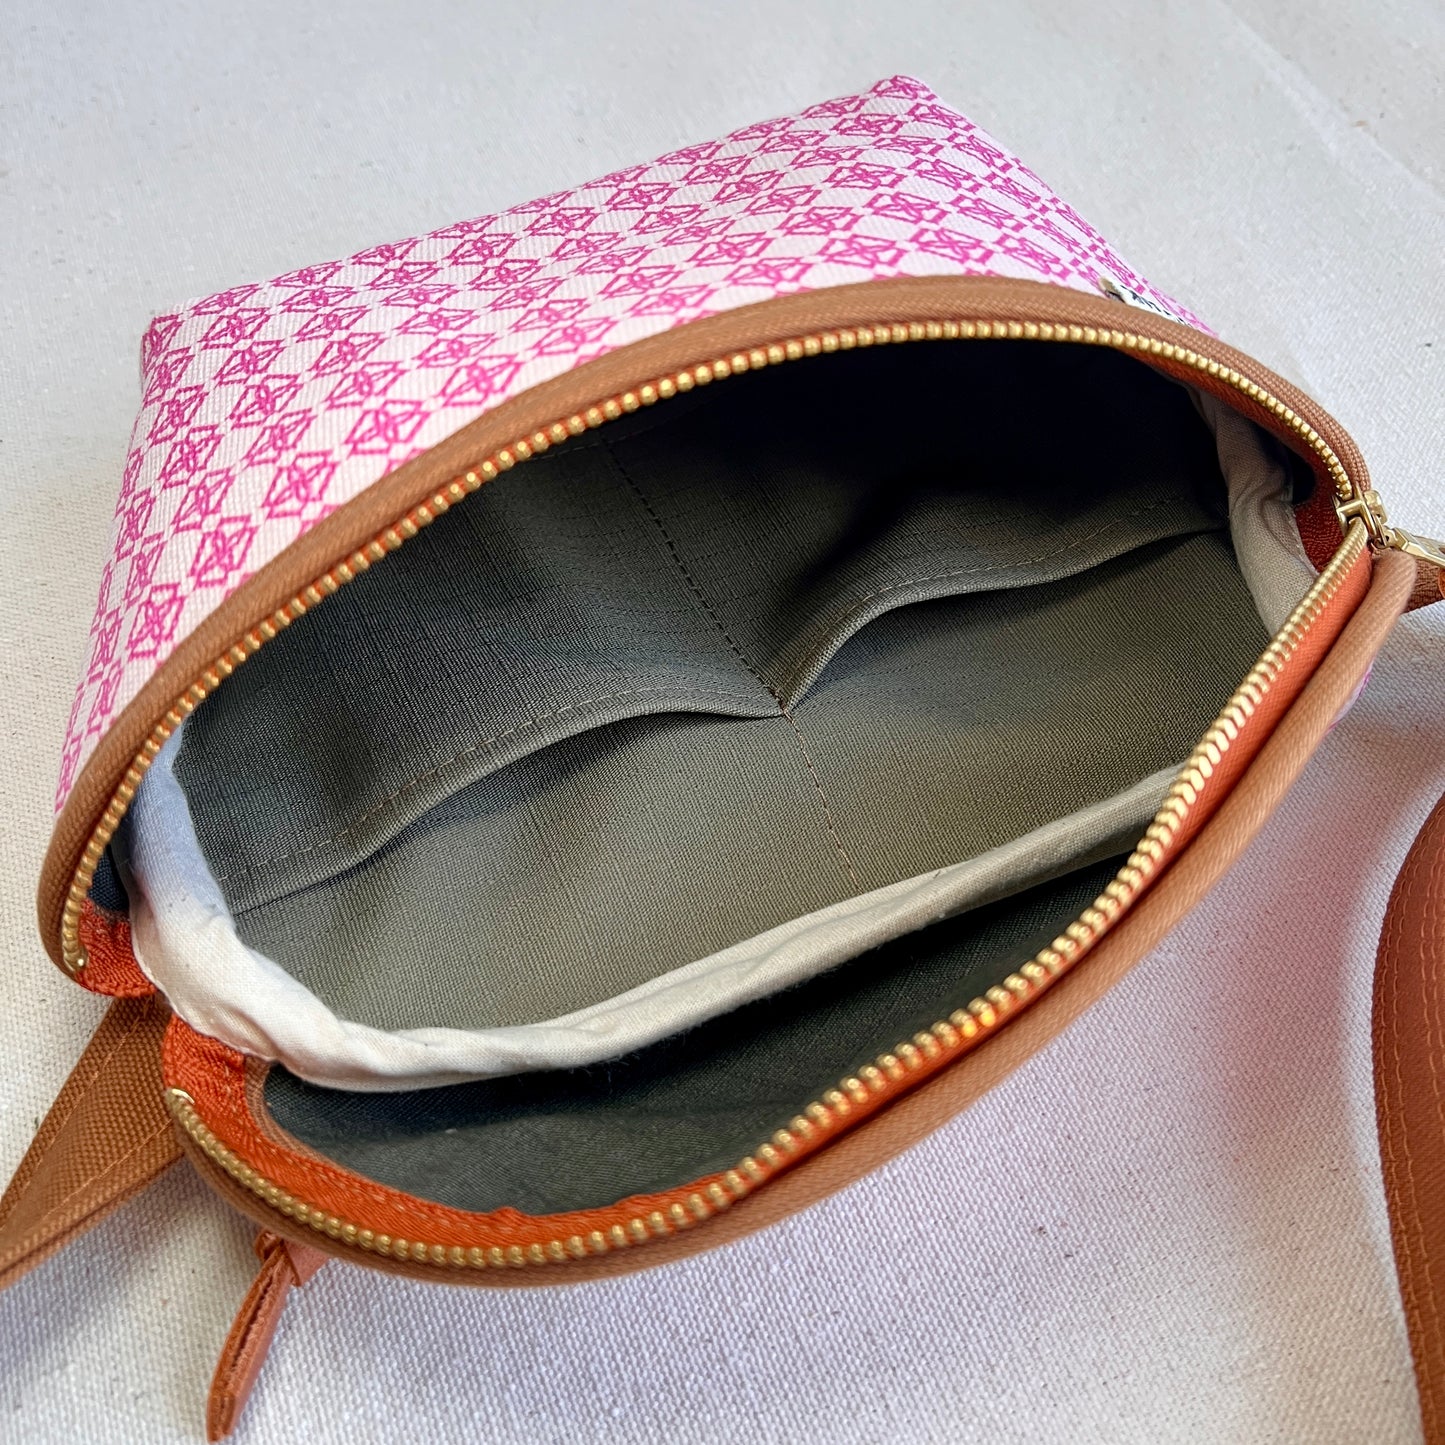 petite fanny bag in hot pink print with caramel trim